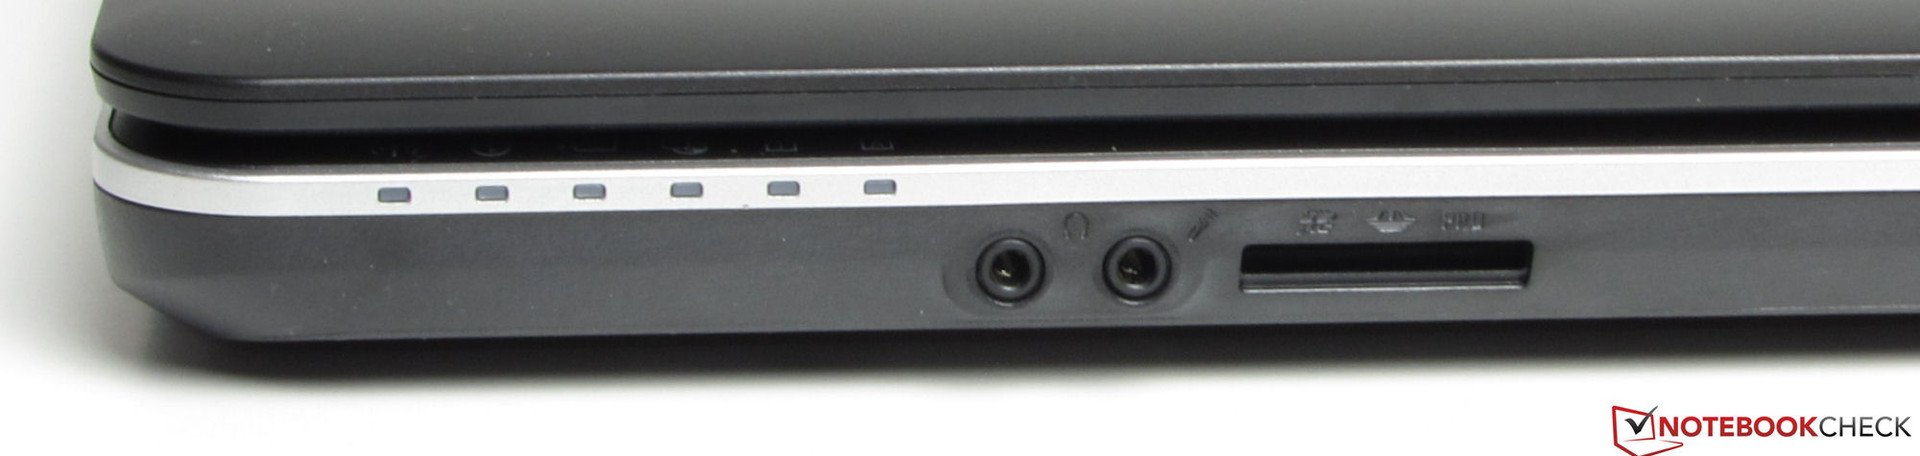 Review Fujitsu LifeBook A512 Notebook - NotebookCheck.net Reviews